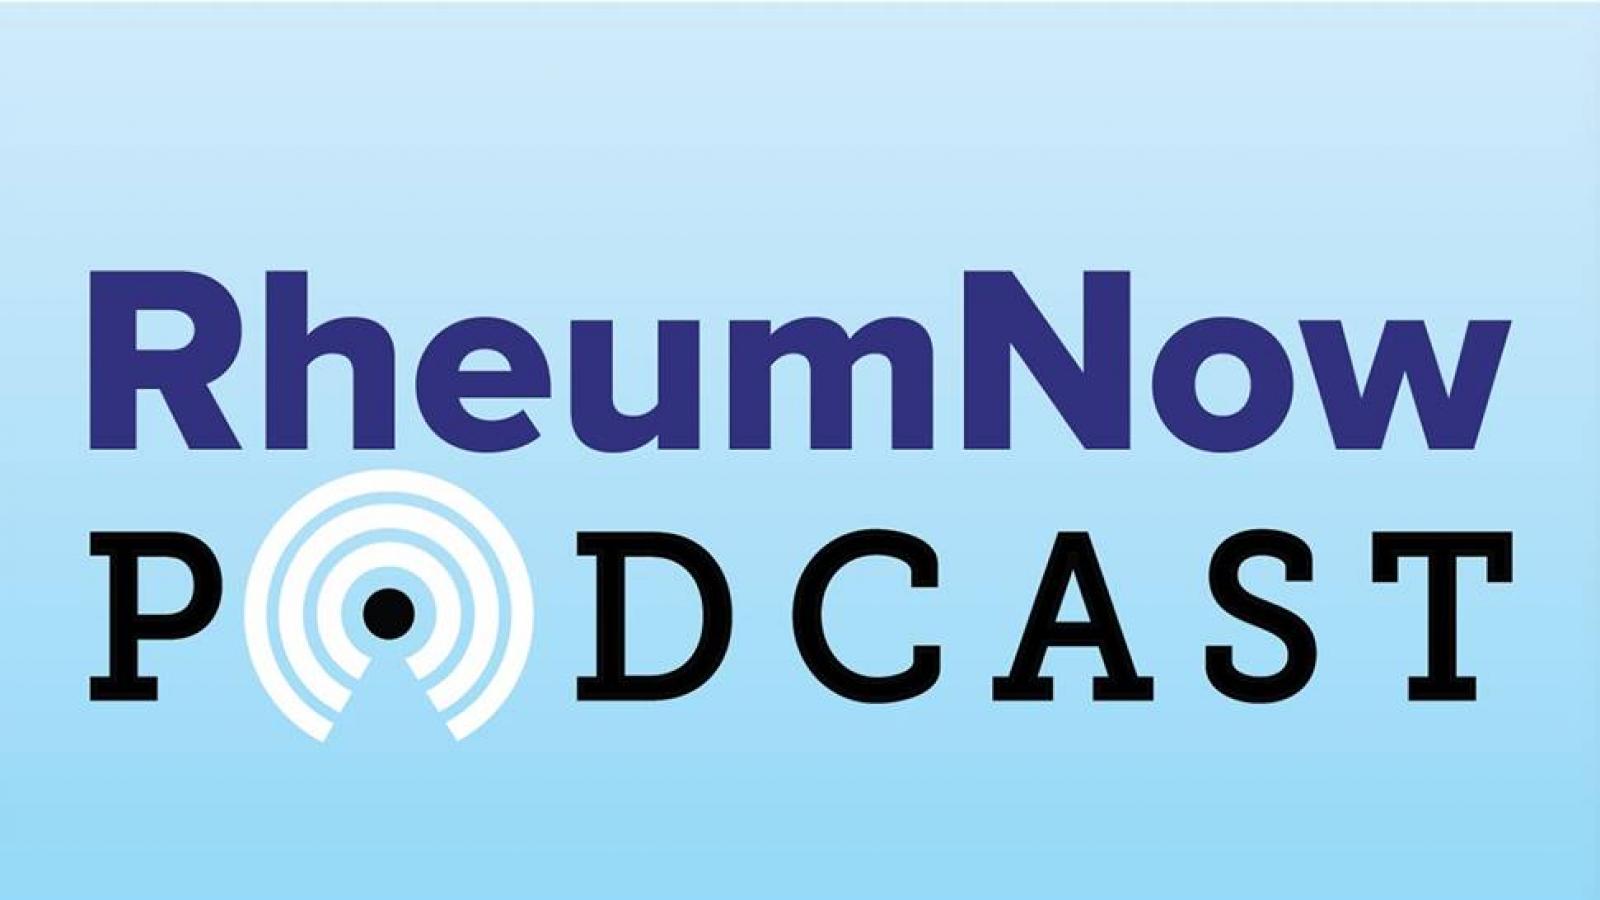 RheumNow Podcast square